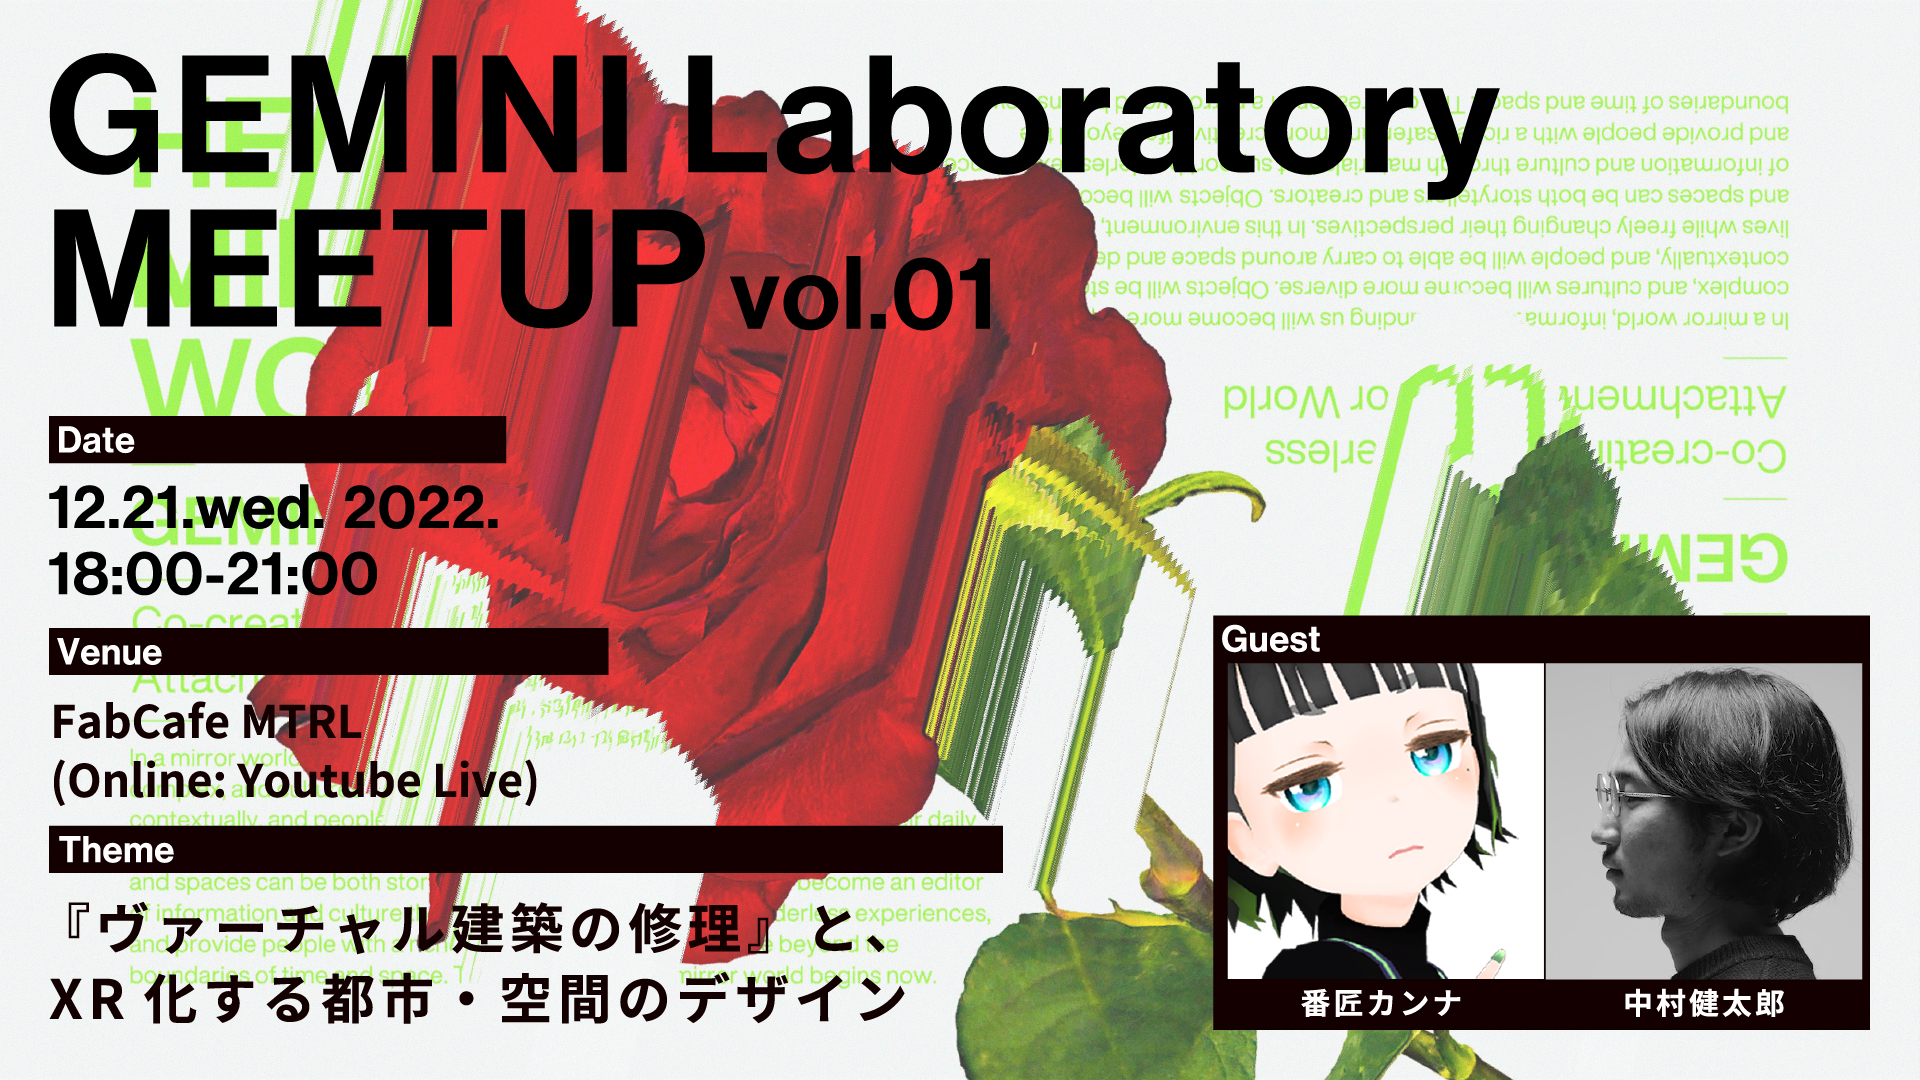 GEMINI Laboratory Meetup vol.01